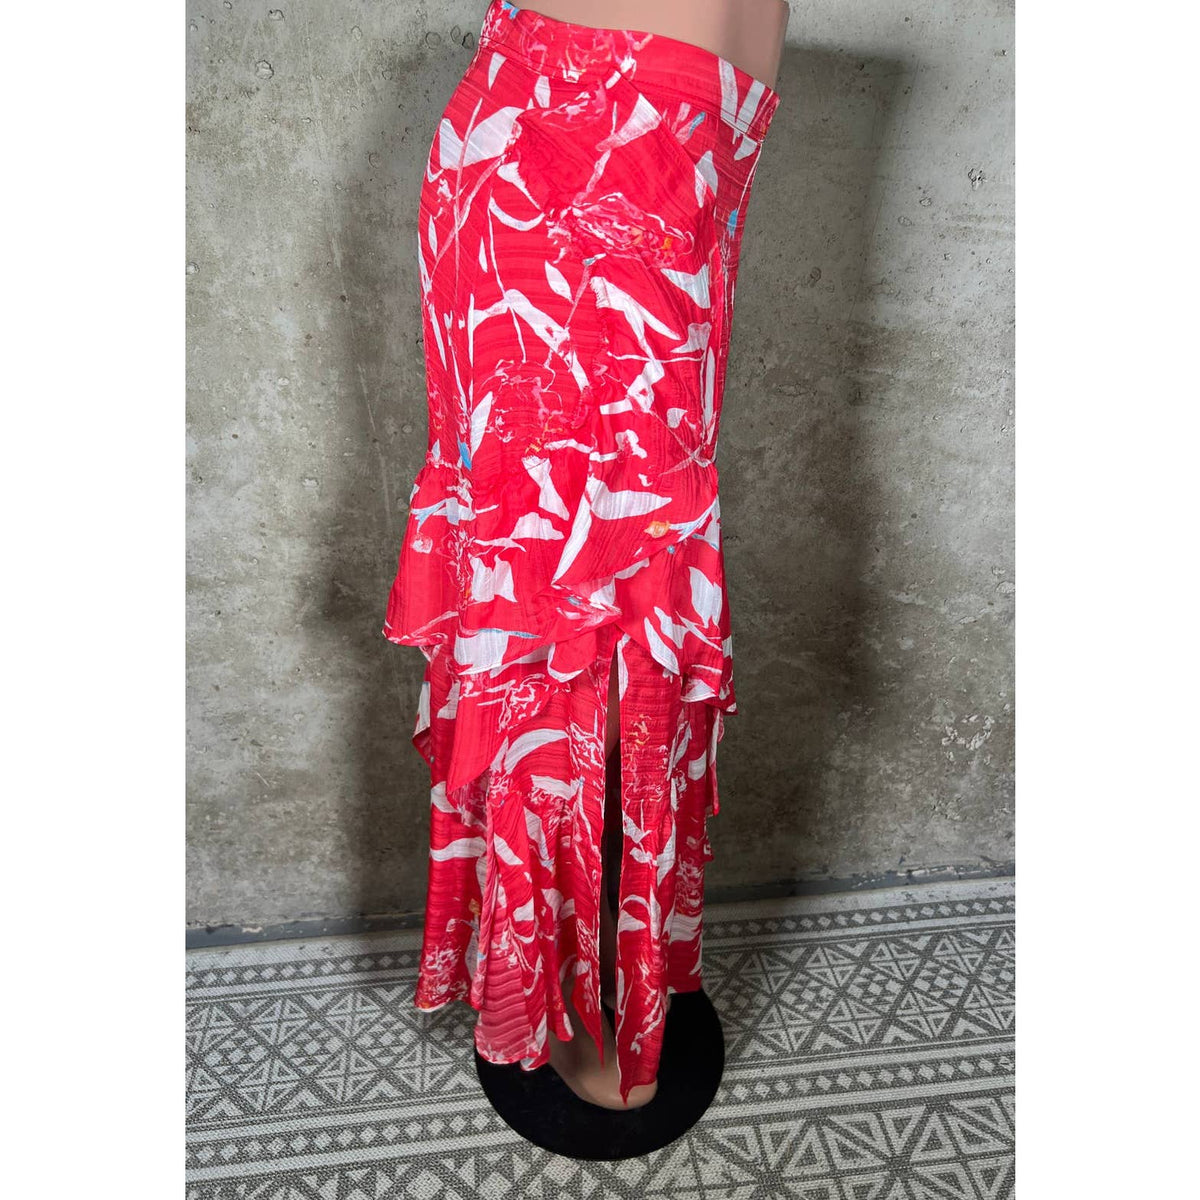 Tanya Taylor Red Floral Skirt Sz.10